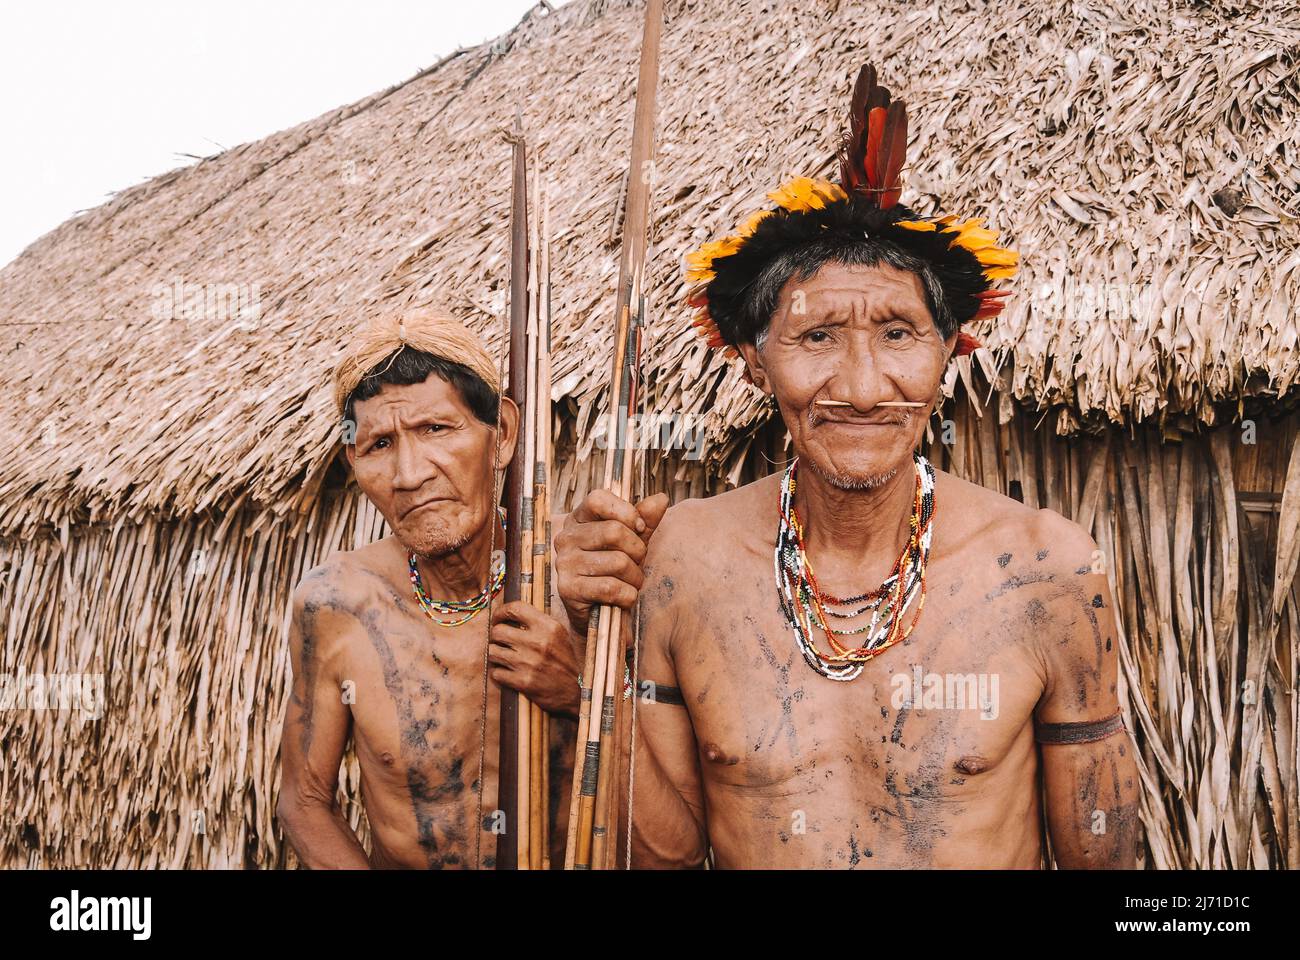 Indian men from the Arara of Laranjal tribe near Xingu River, Amazon, Brazil. 2007. Stock Photo